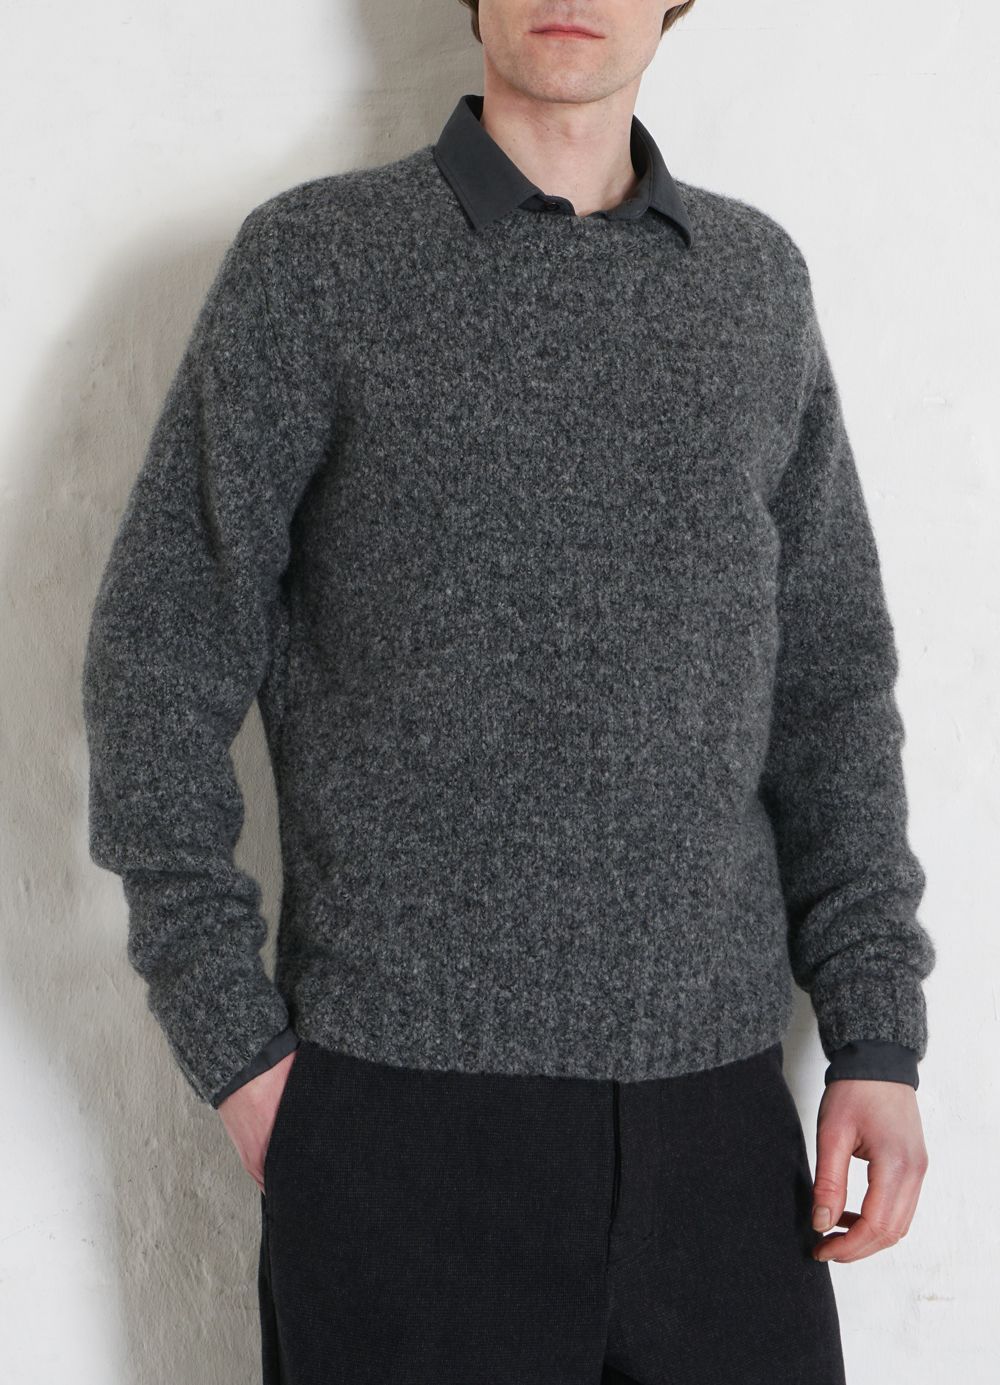 HANSEN GARMENTS - LEONARD | Knitted Crew Neck Sweater | Ashes - HANSEN Garments